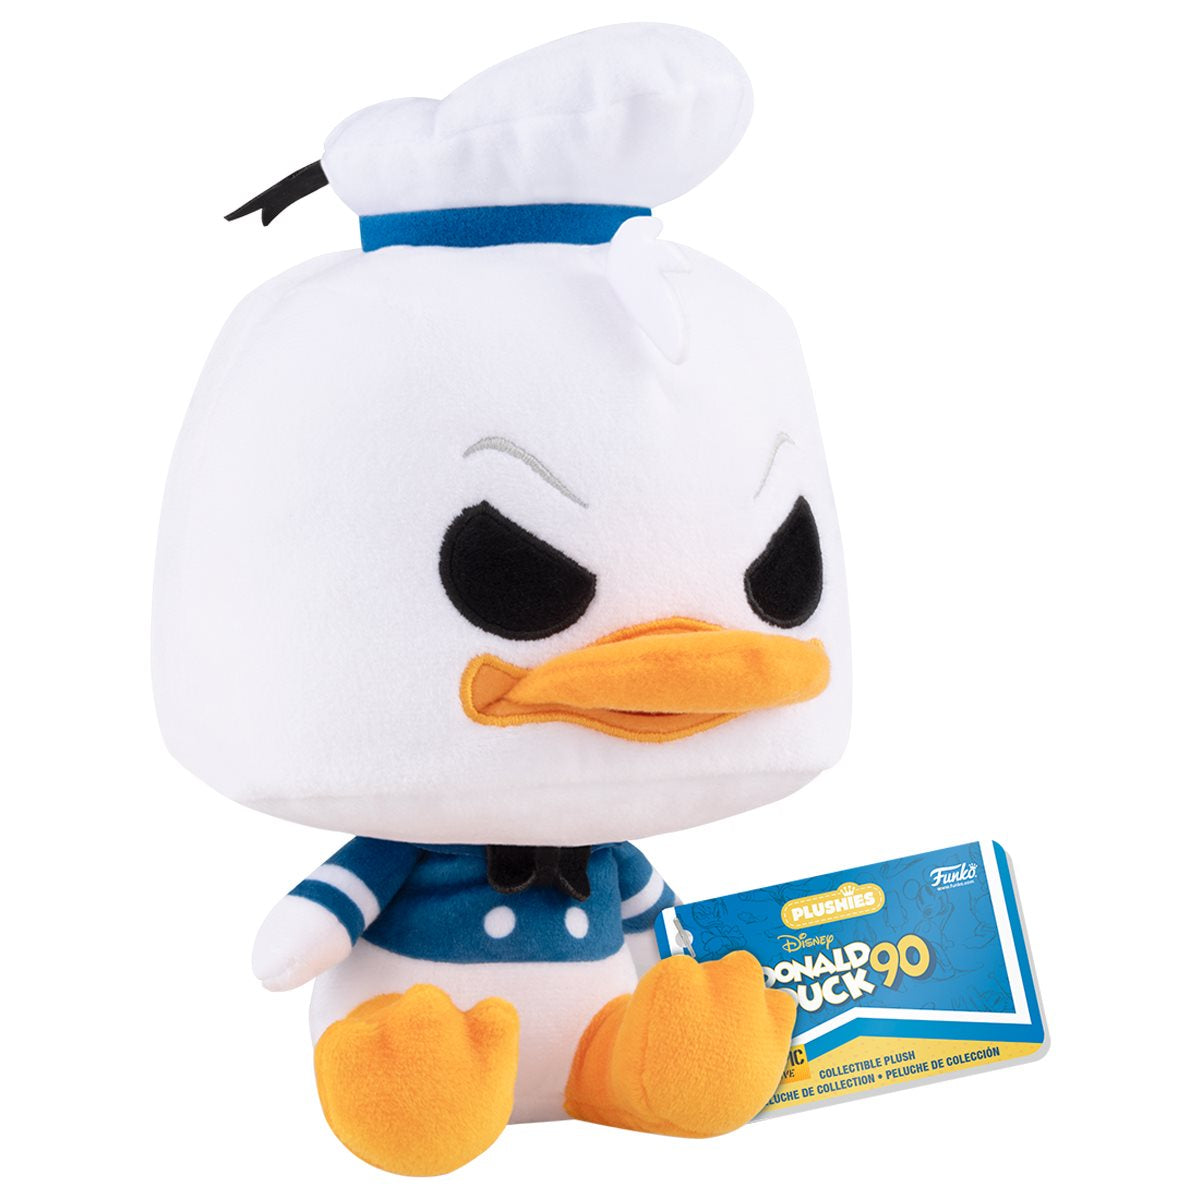 Funko Disney Donald Duck 90th Anniversary Angry Donald Duck 7-Inch Plush